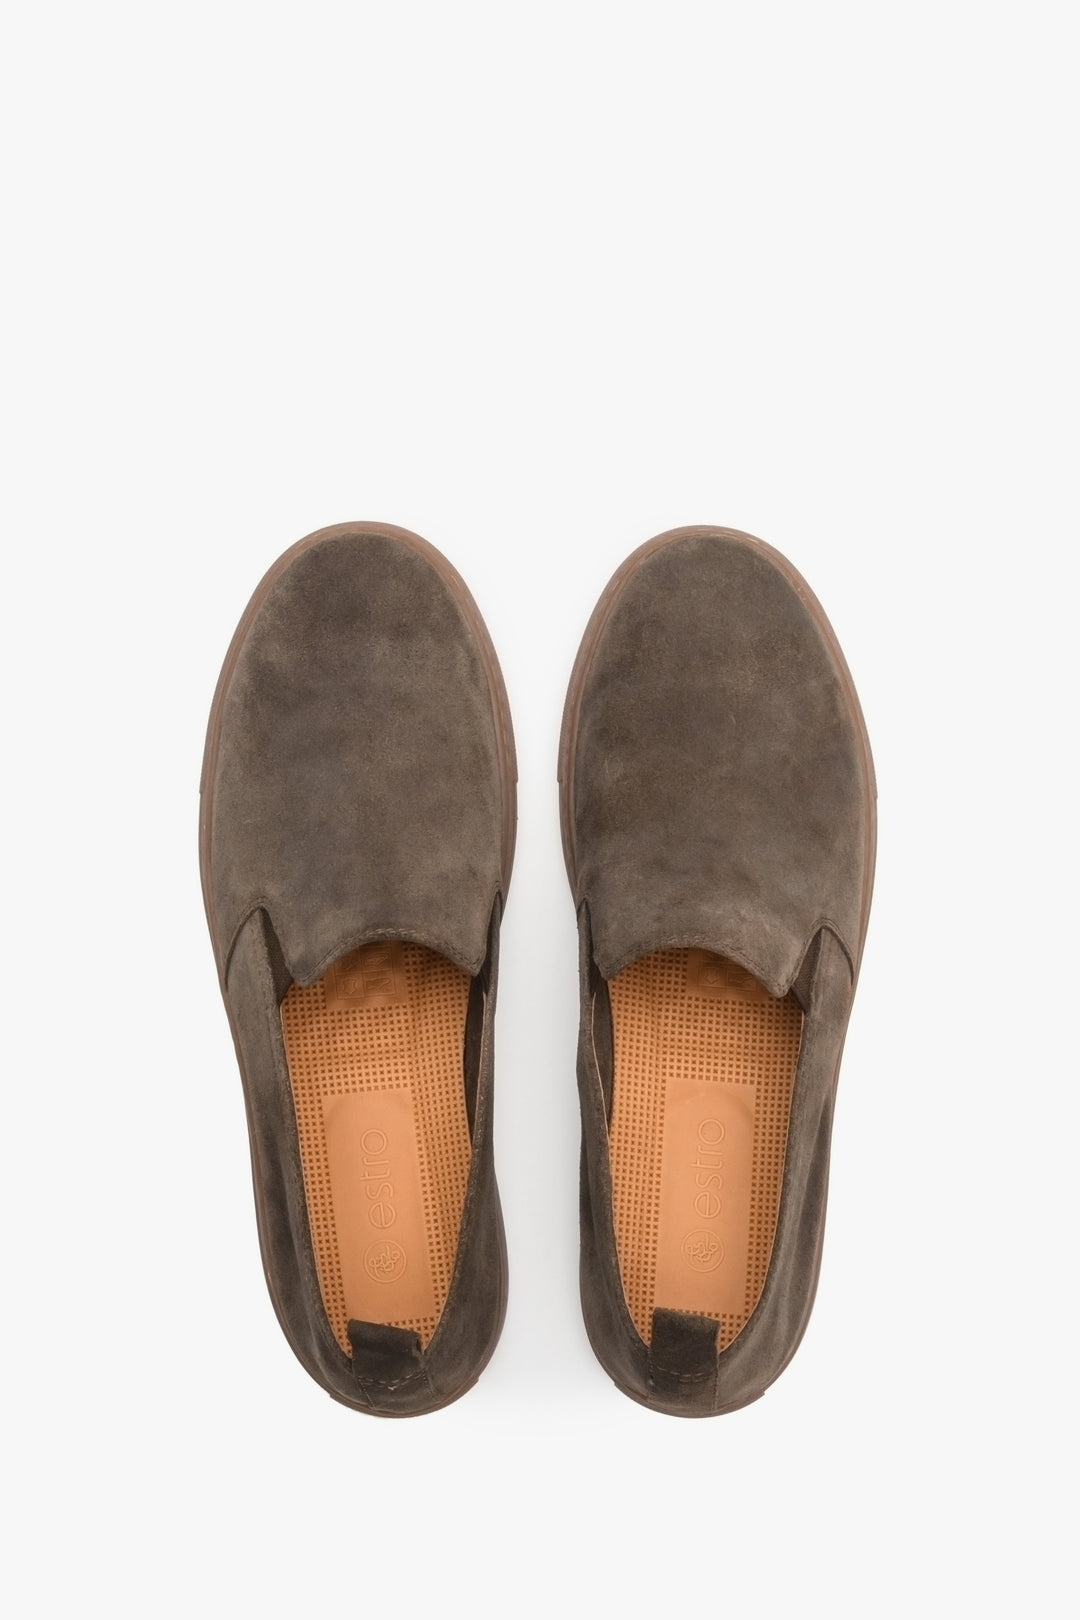 Men's dark brown velour loafers for spring - top view model presentation.